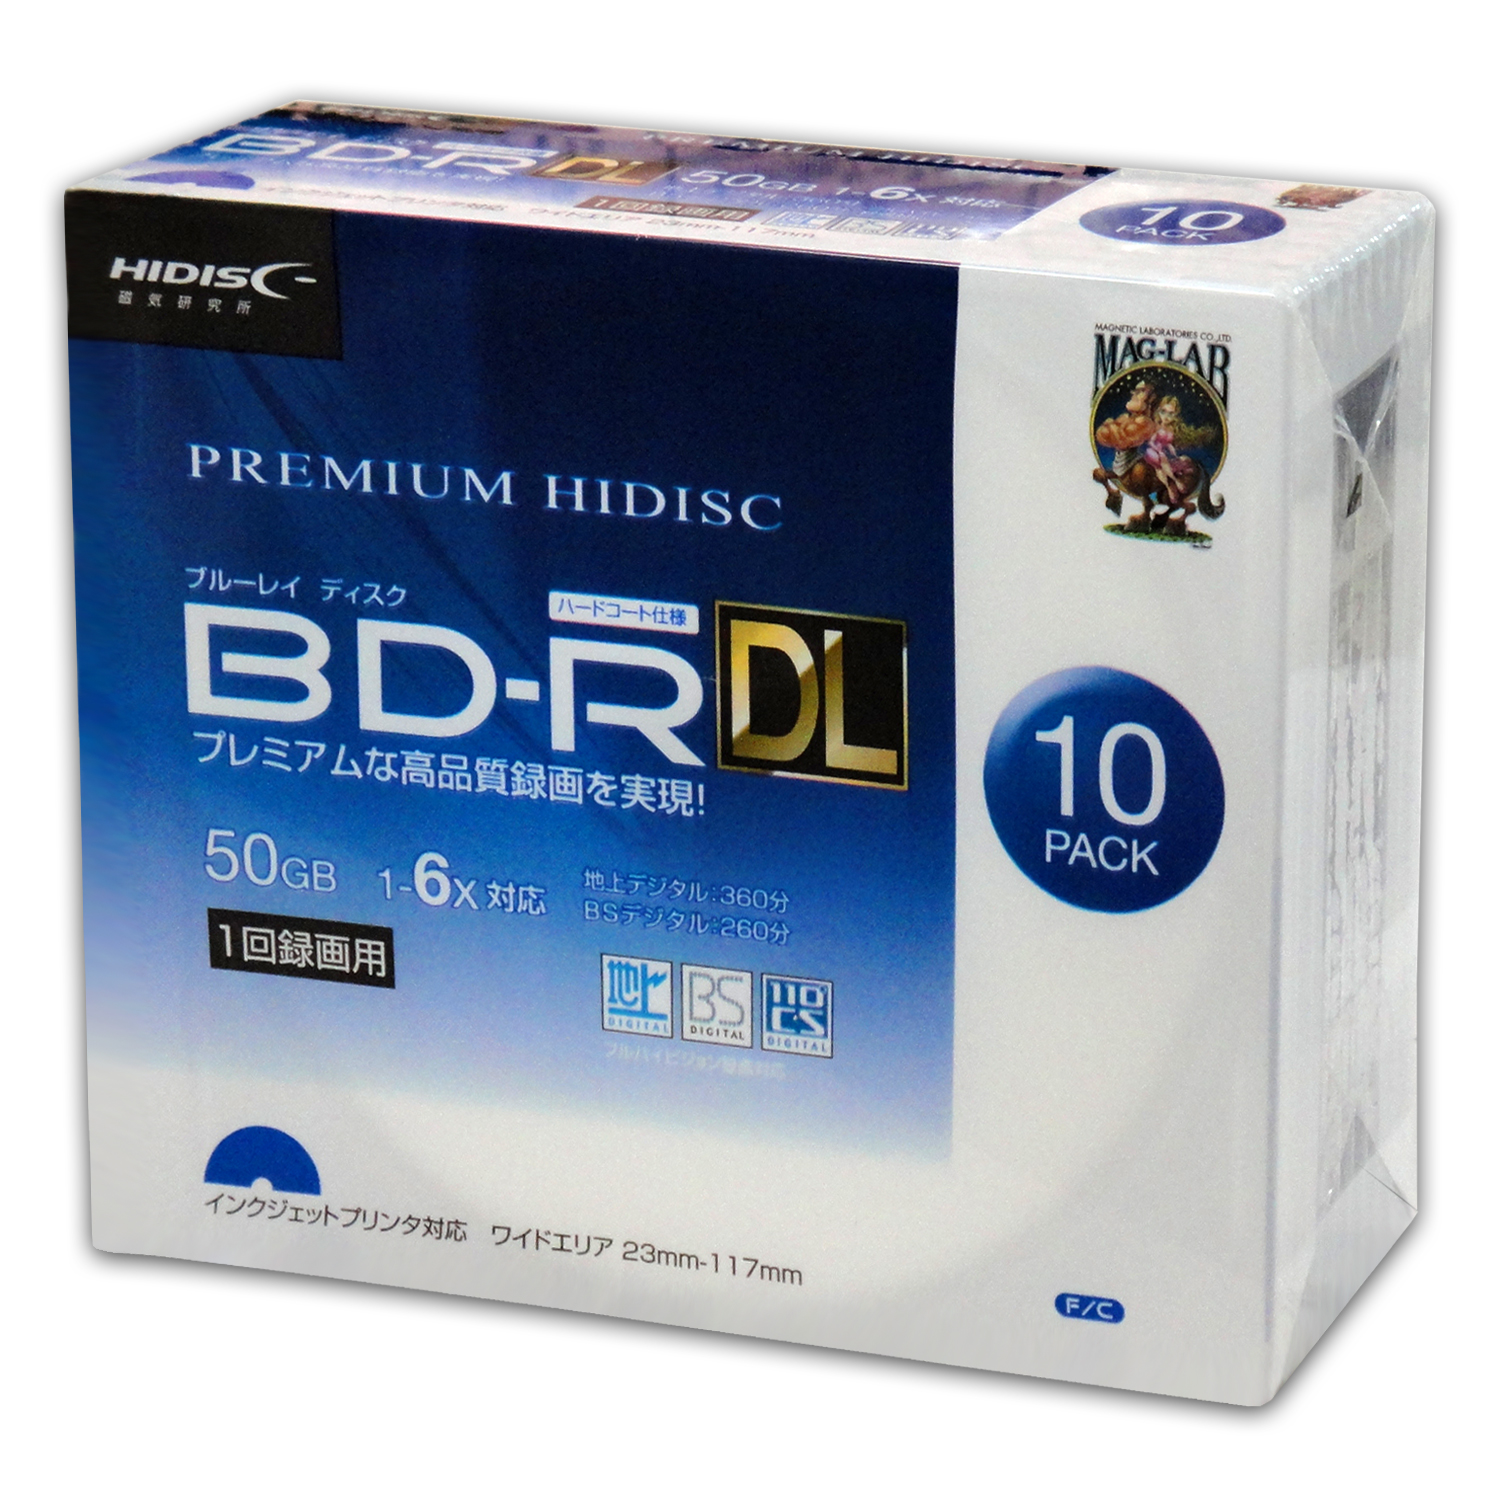 HIDISC 録画用BD-R DL 50GB 1-6倍速対応 50枚 スピンドルケース HDBDRDL260RP50 | HIDISC  株式会社磁気研究所